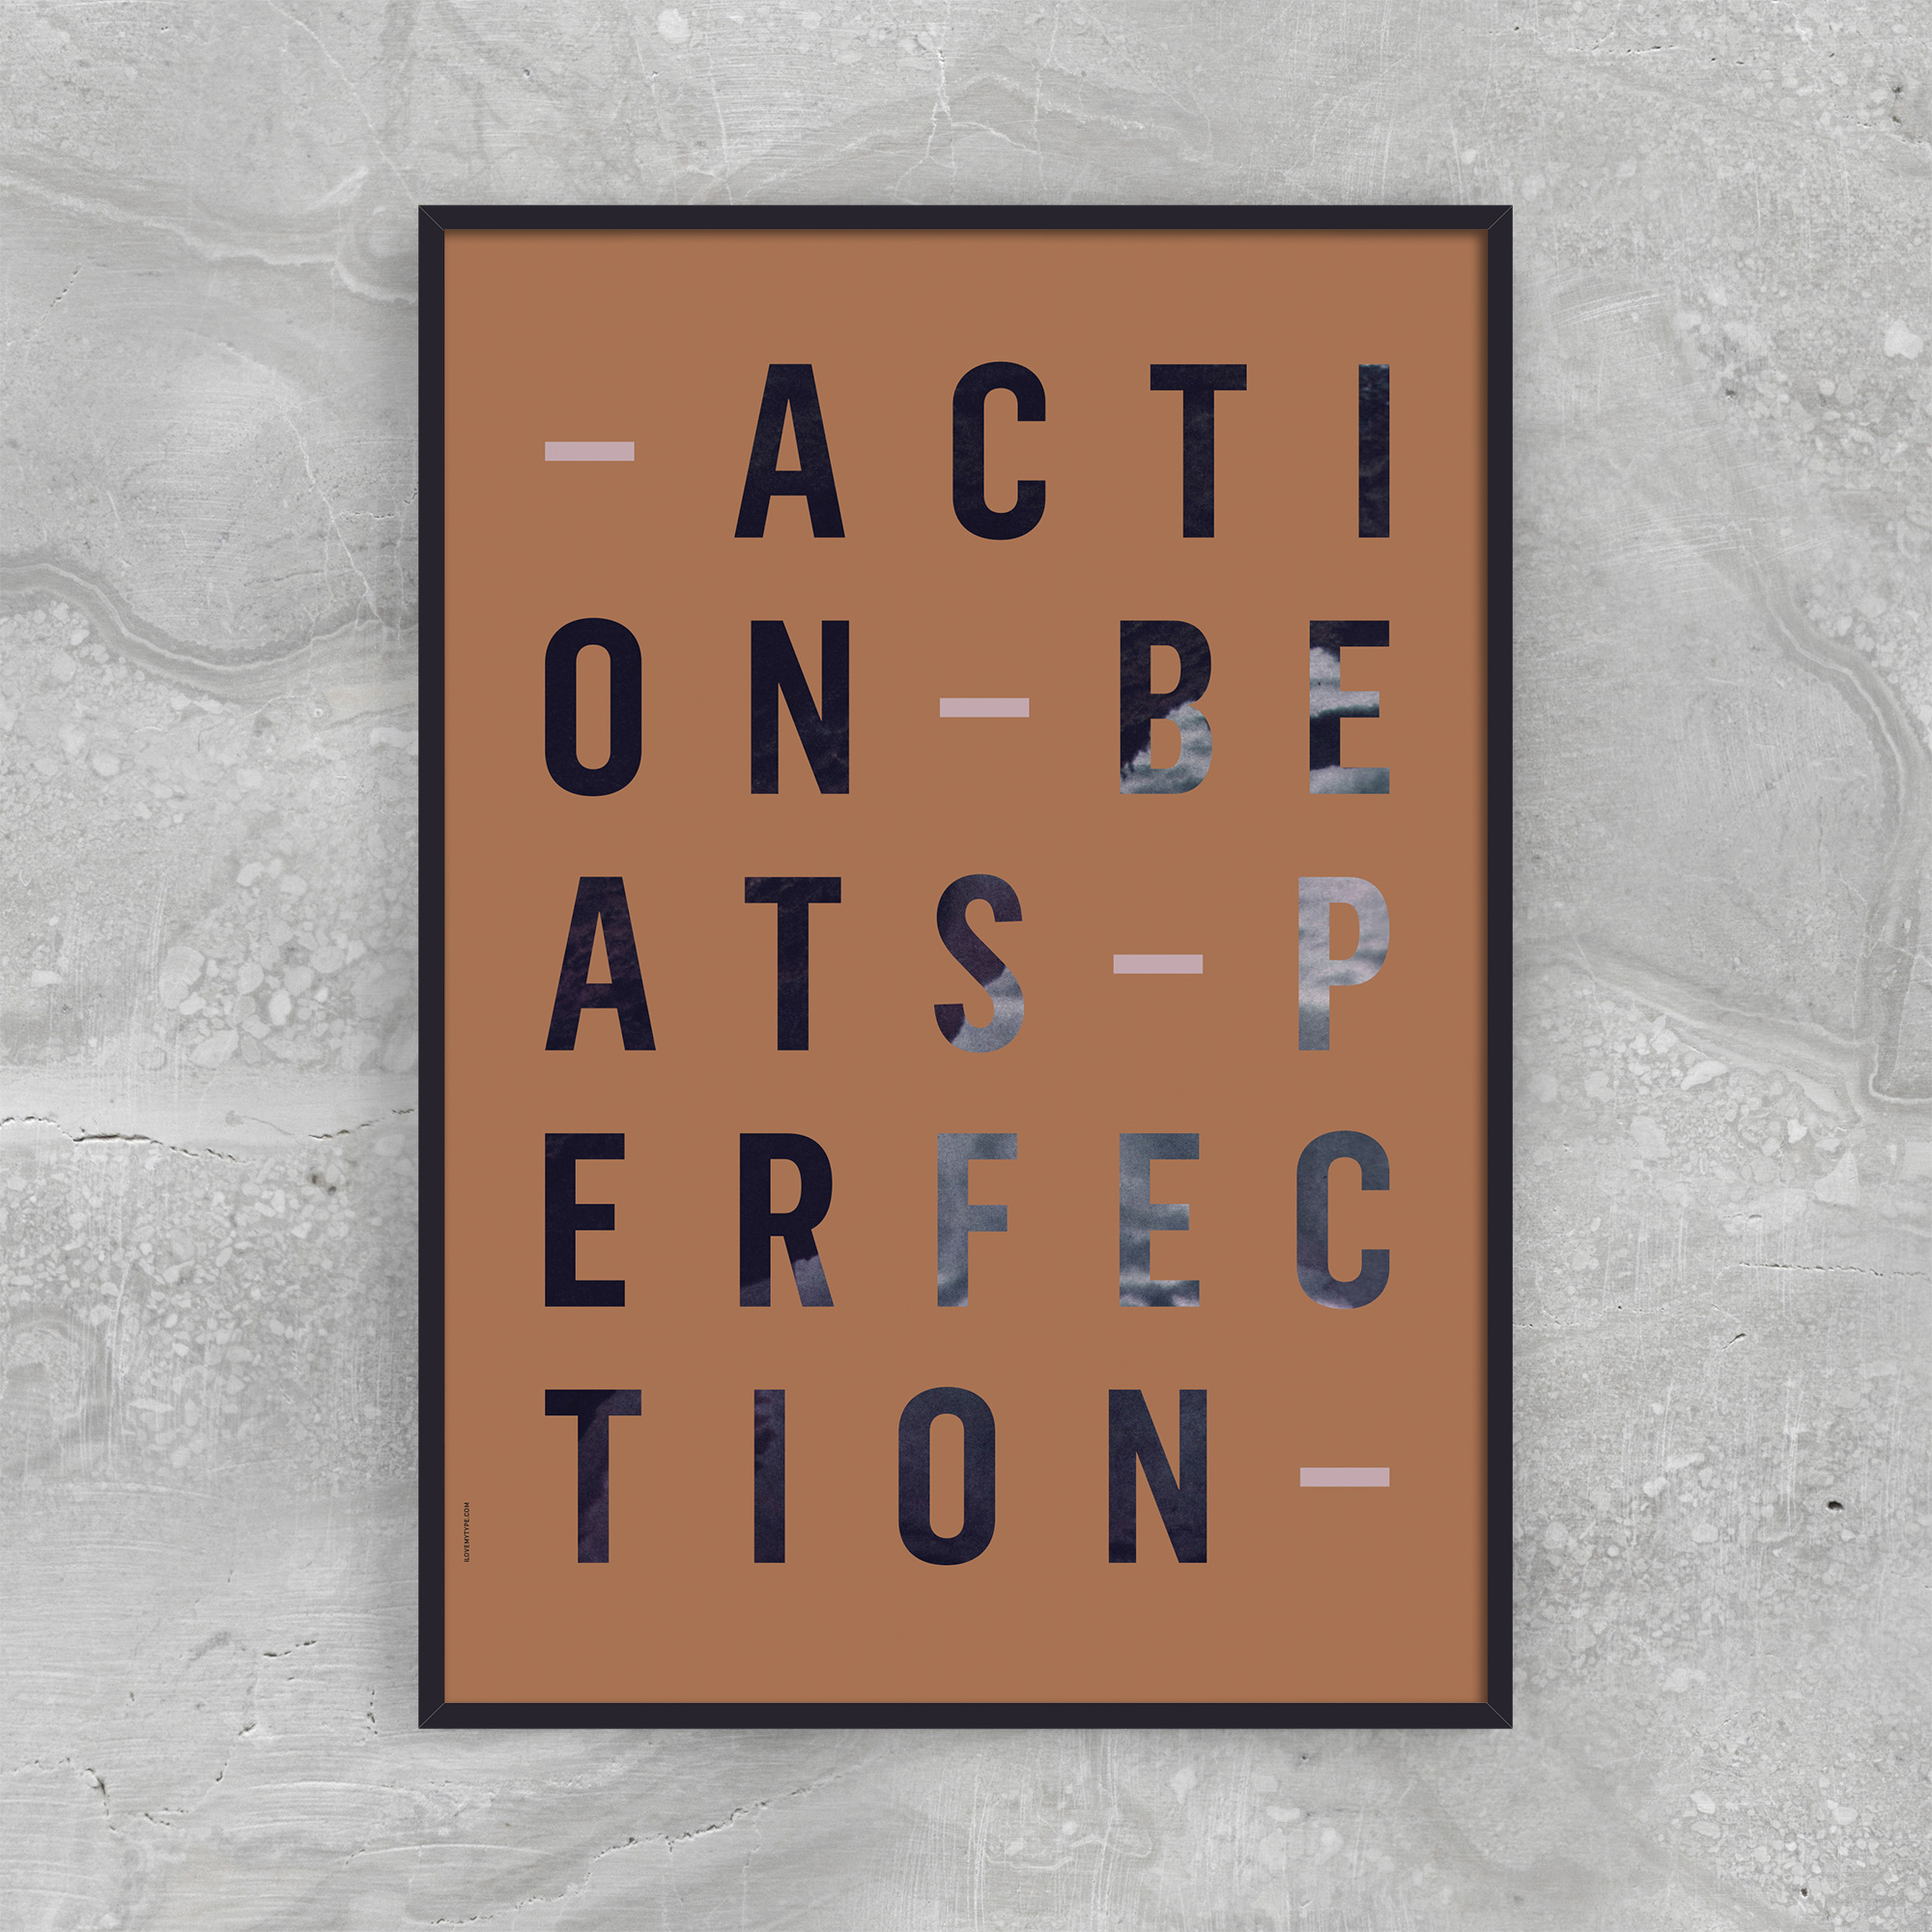 Se ACTION PERFECTION - AMBER hos Picment.dk